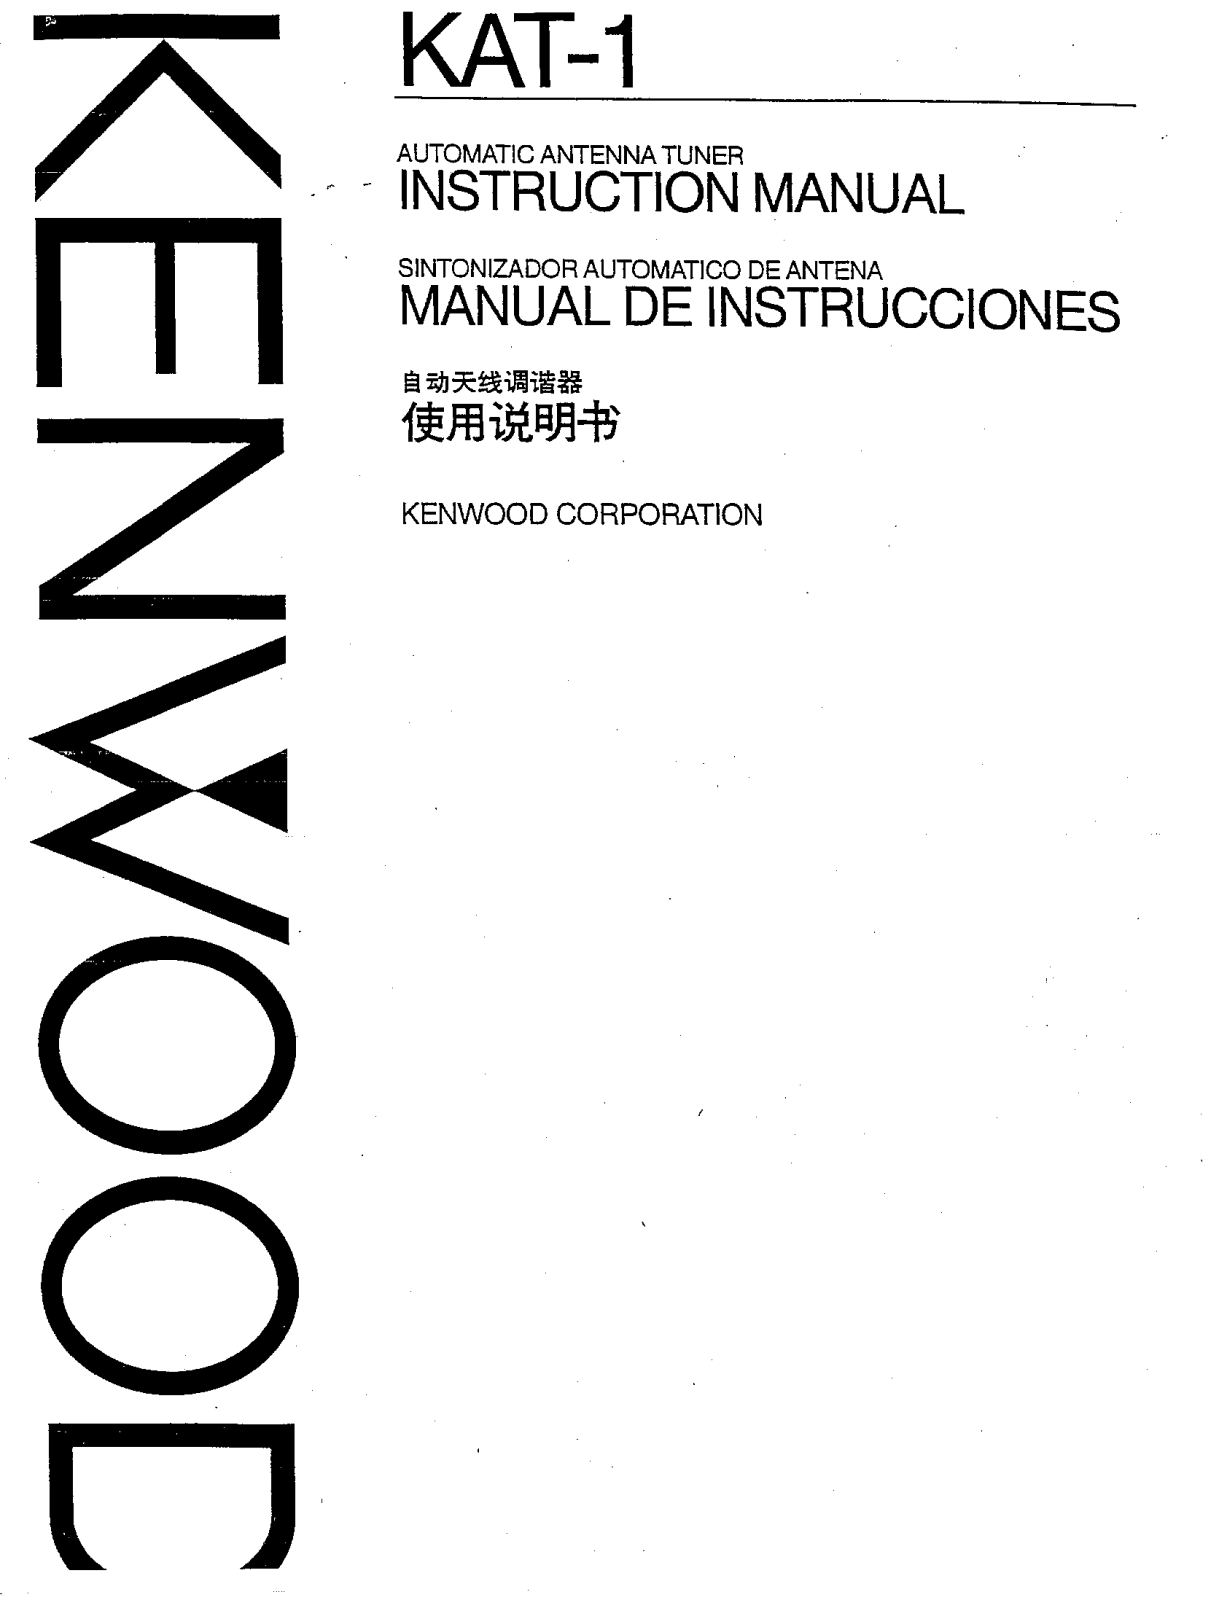 Kenwood KAT-1 Owners Manual